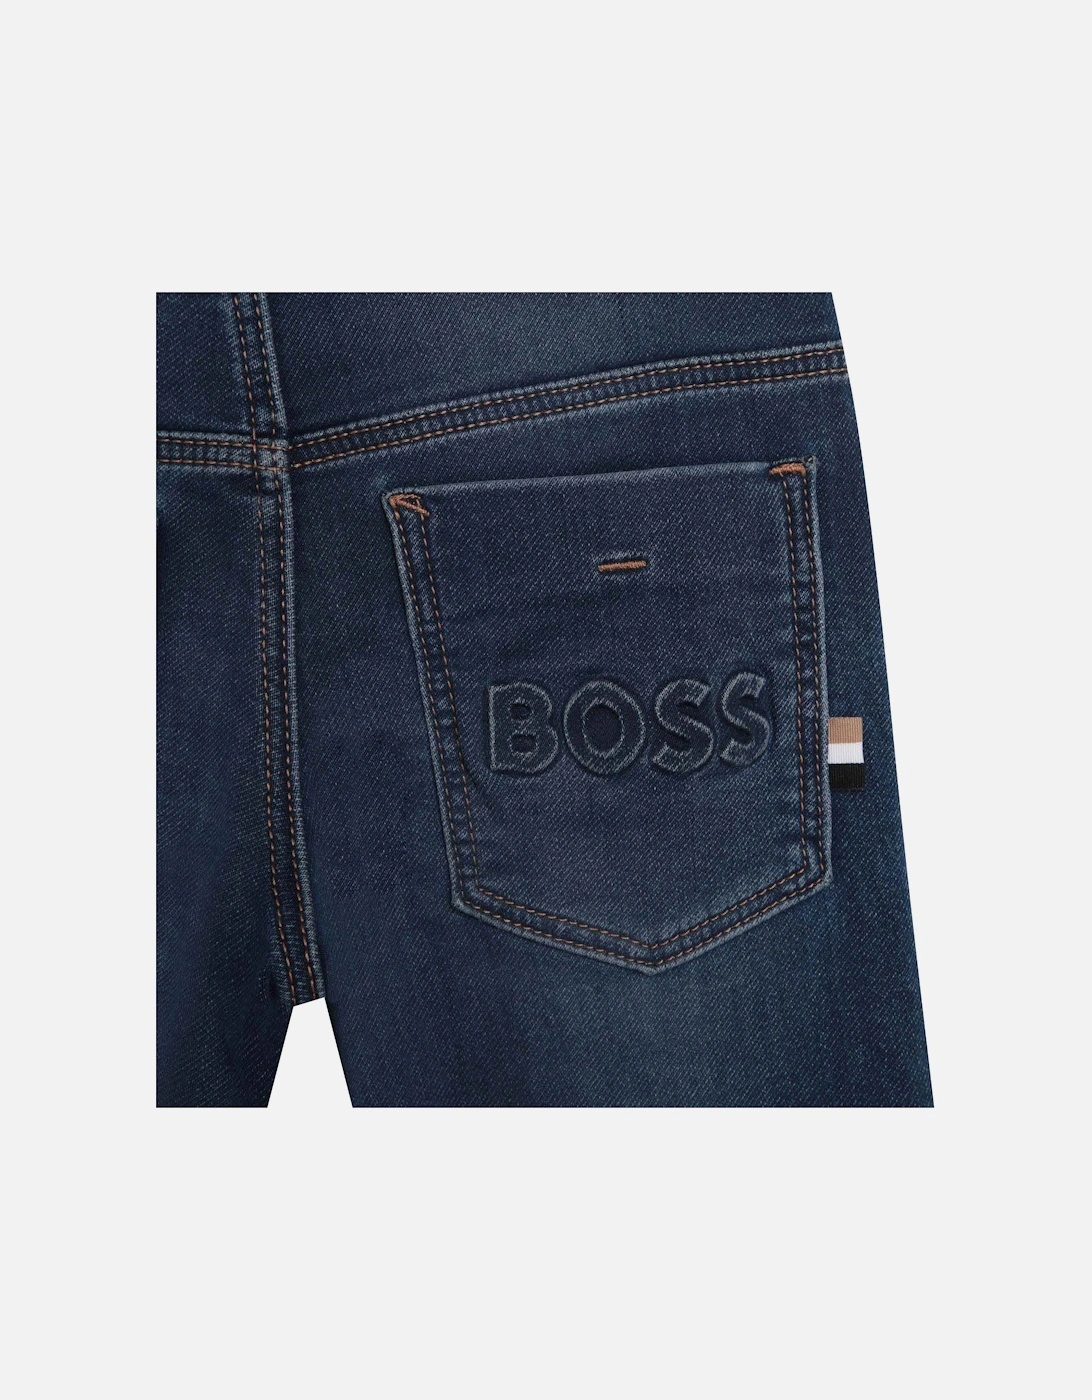 Boys Denim Jeans ** REGULAR FIT**24802